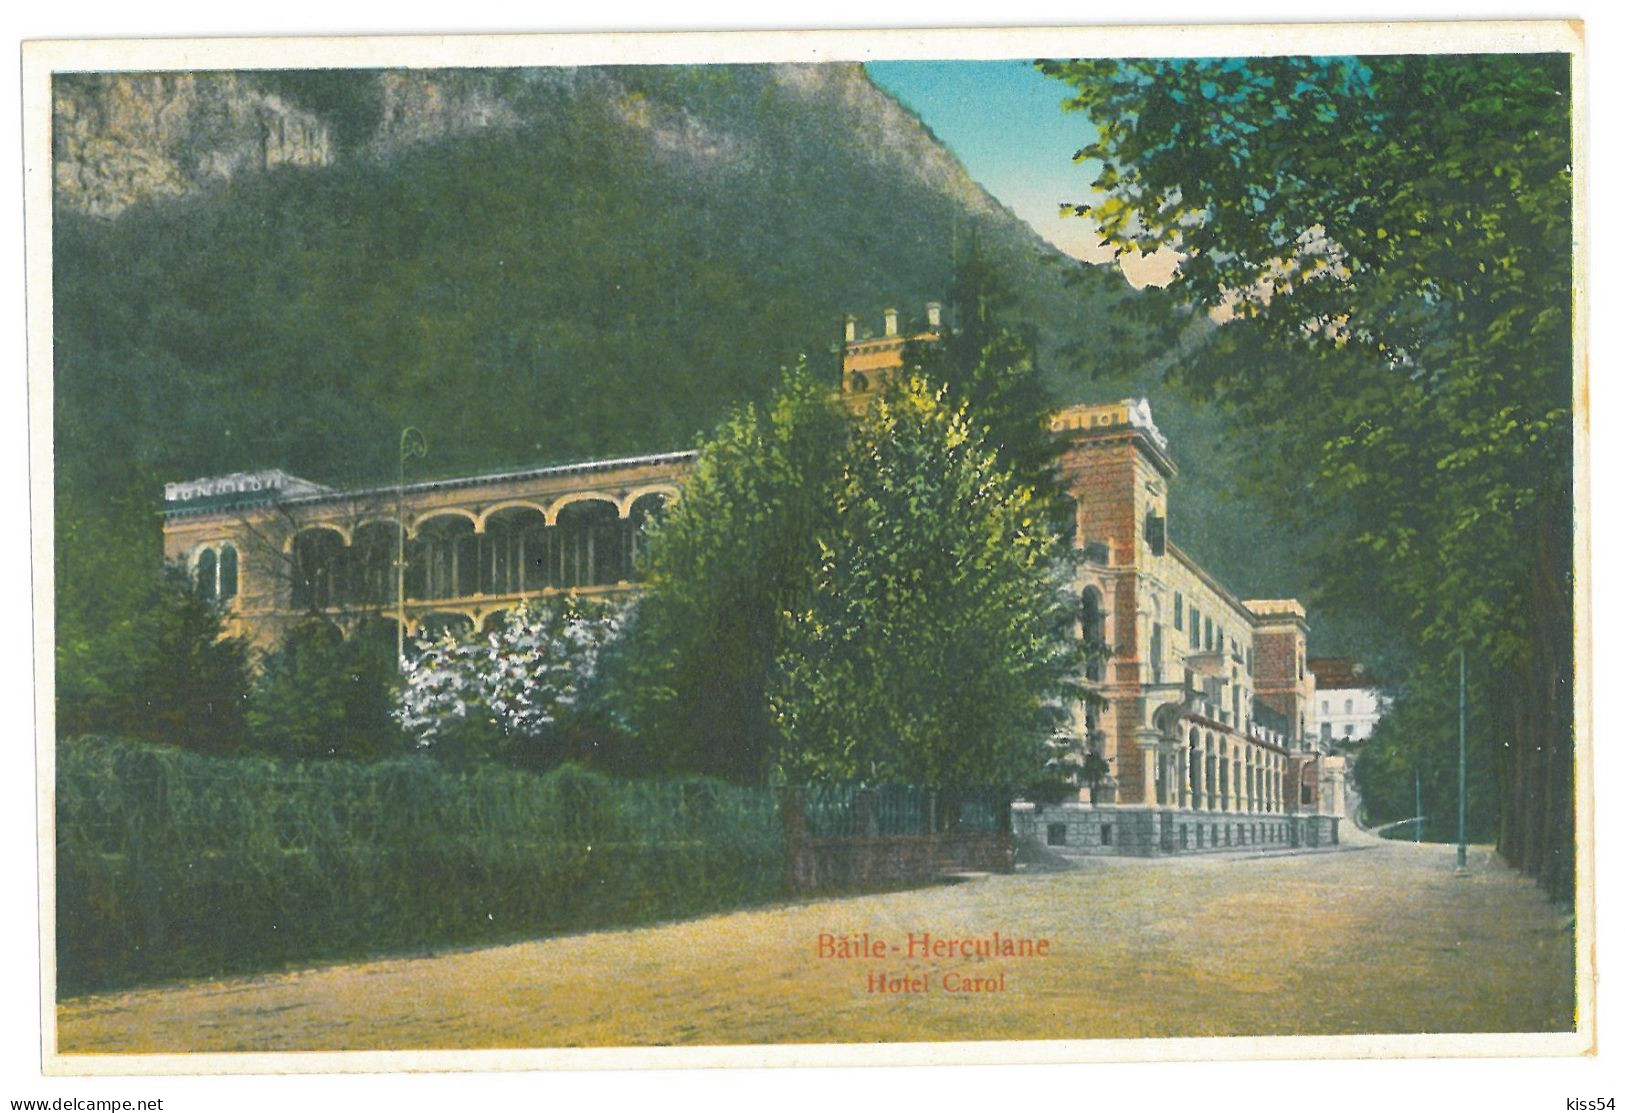 RO 47 - 25082 Baile HERCULANE, Carol Hotel, Romania - Old Postcard - Unused - Romania